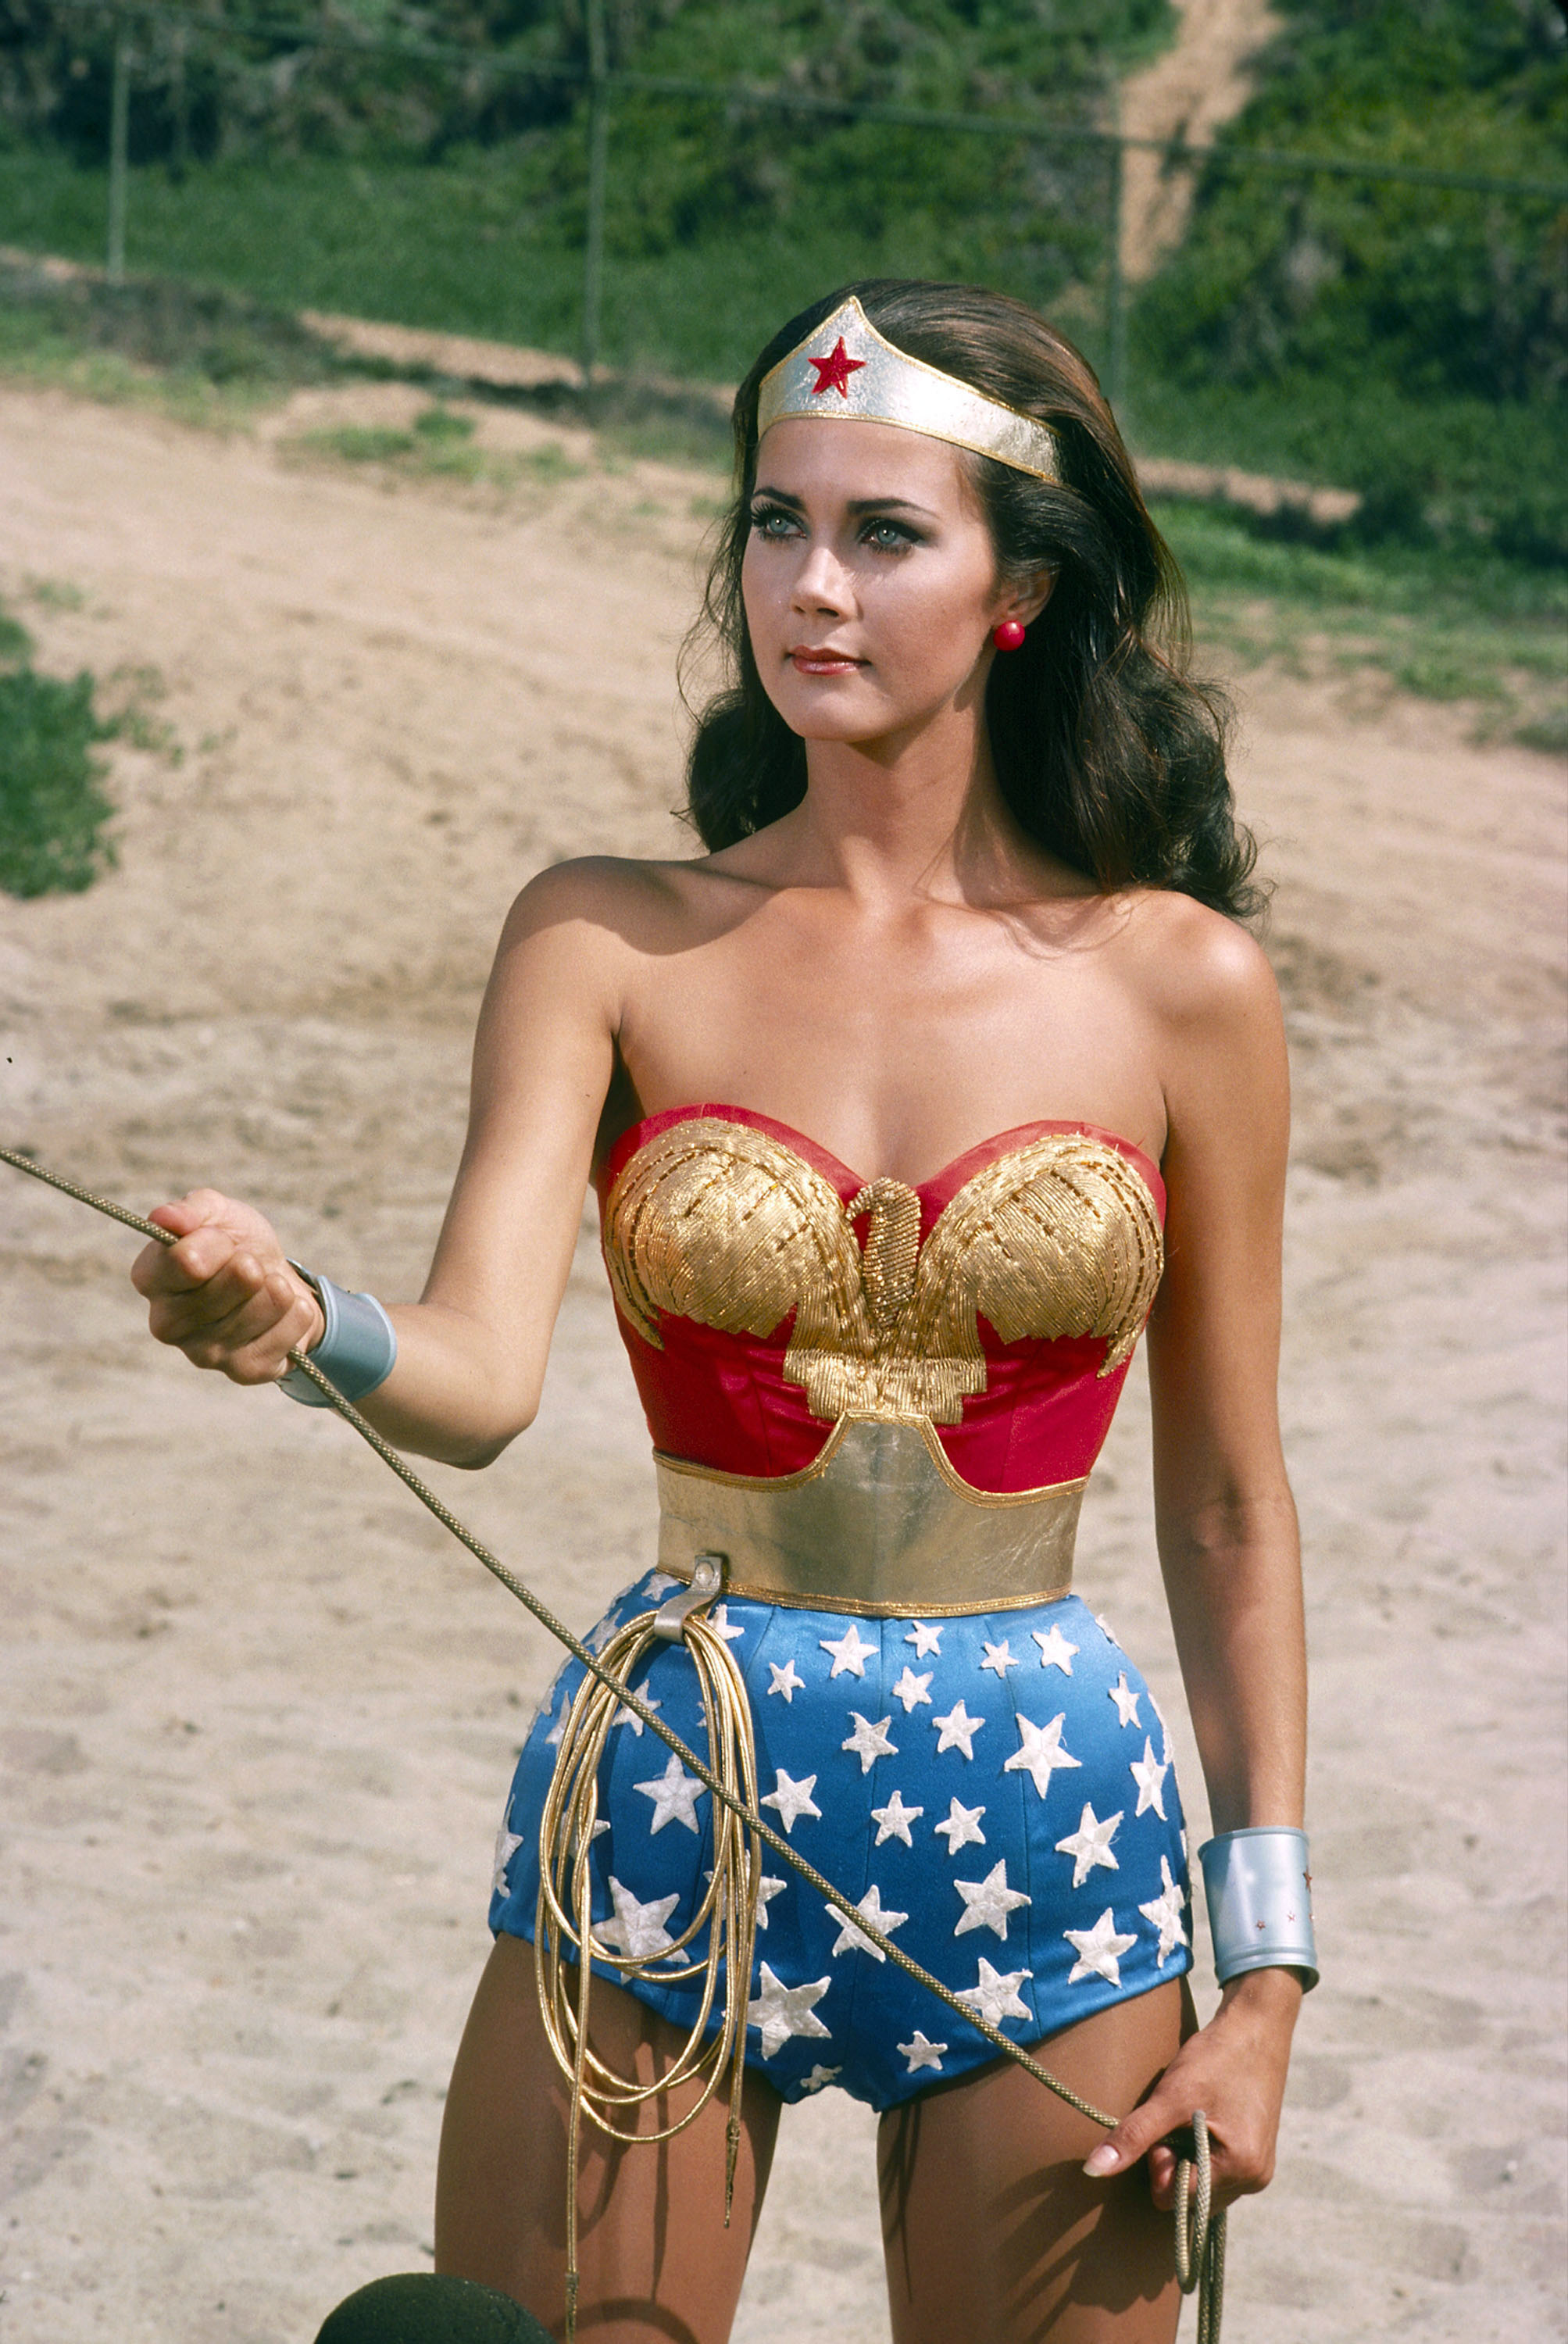 Lynda Carter in "Wonder Woman", 1977 | Quelle: Getty Images